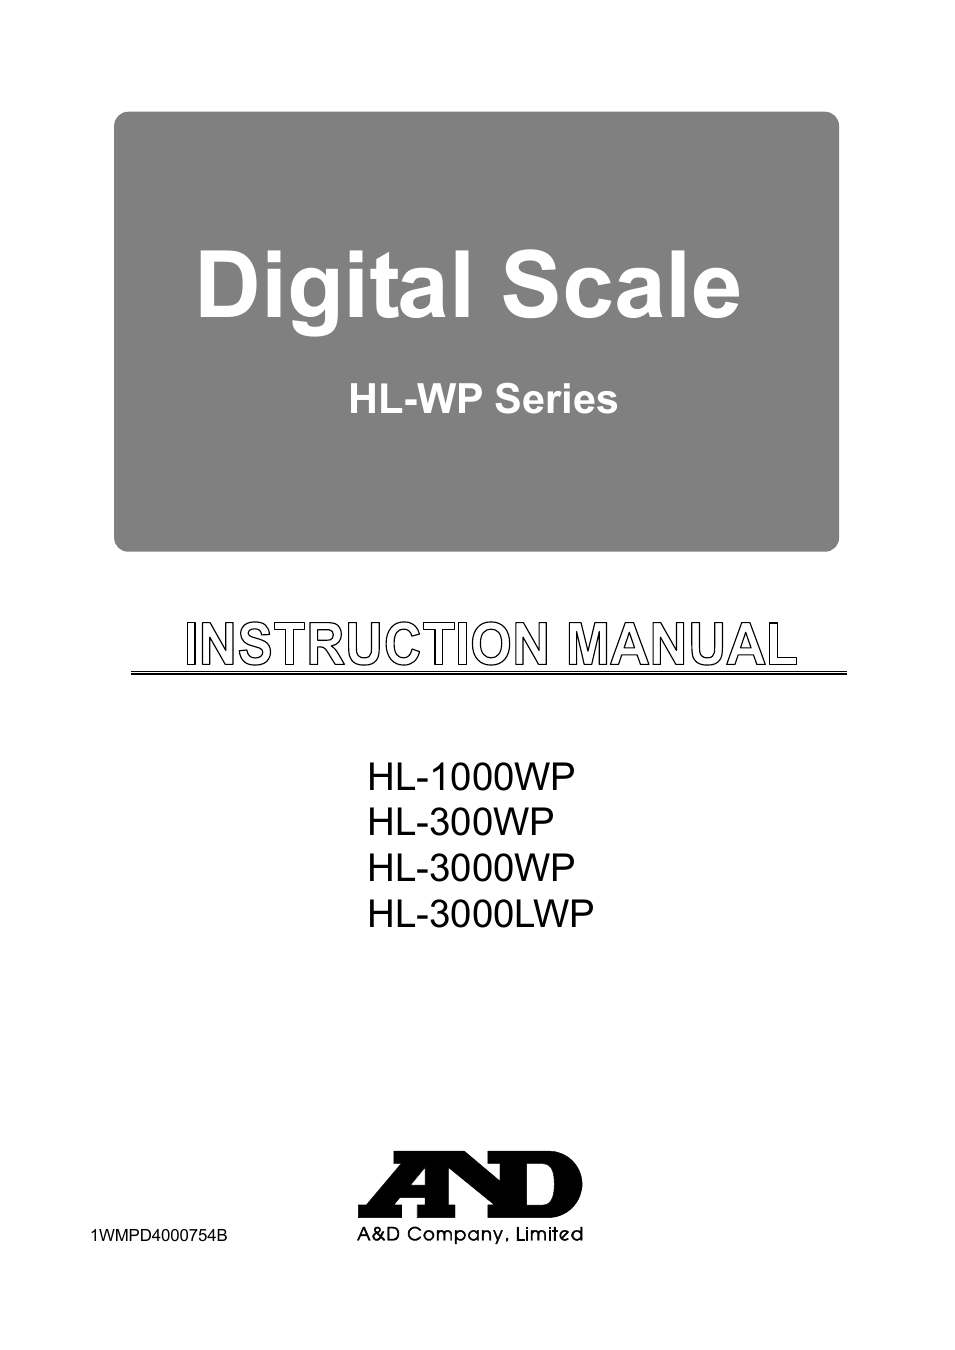 Digital Scale HL-3000LWP (Page 1)